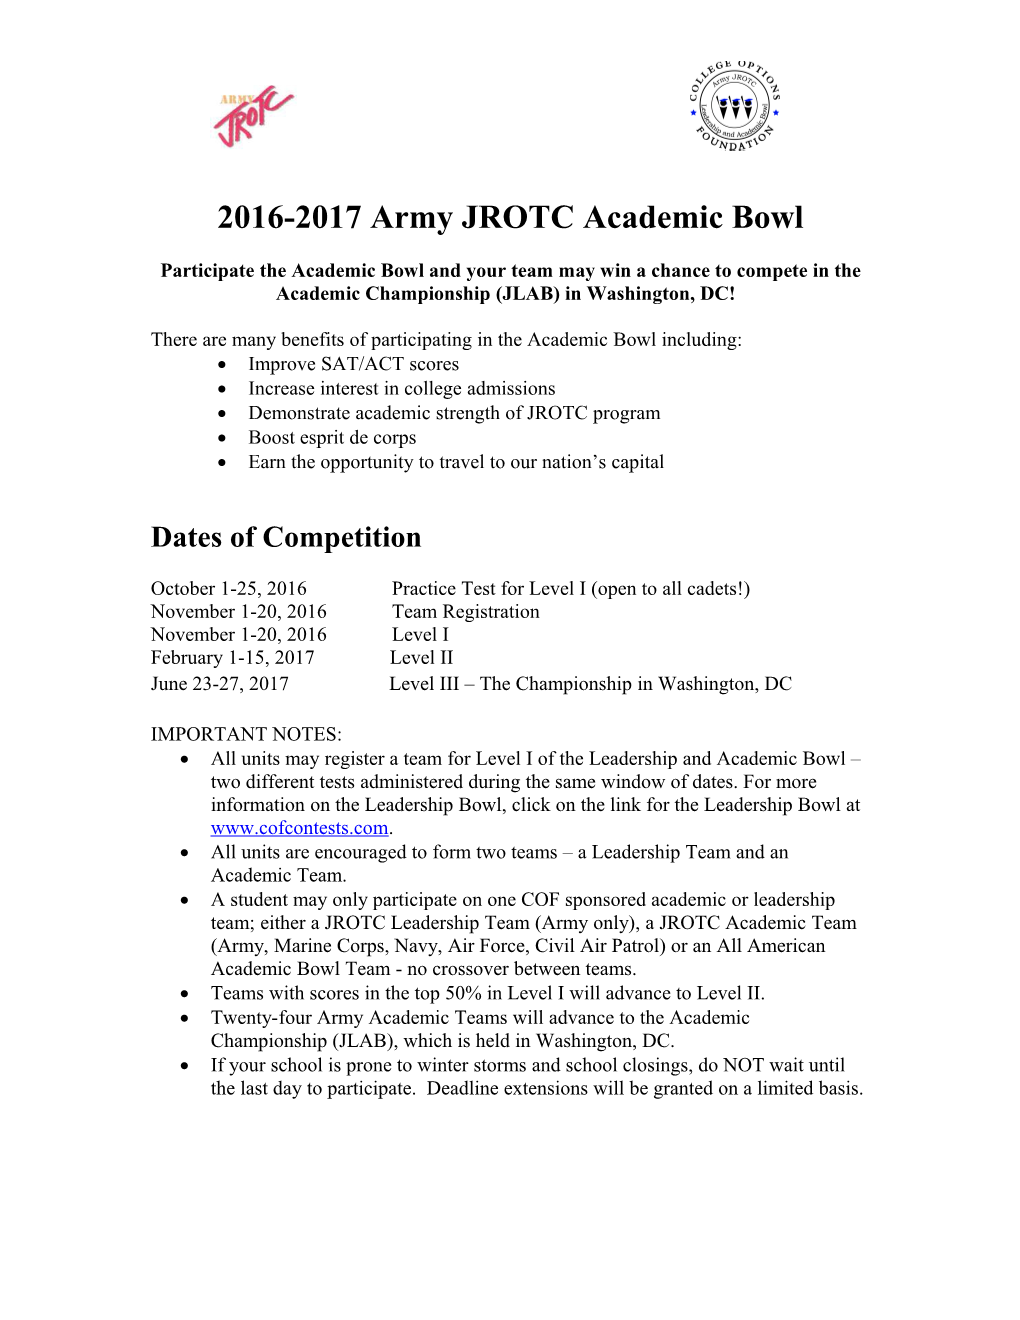 2006-2007 JROTC President S Academic Championship